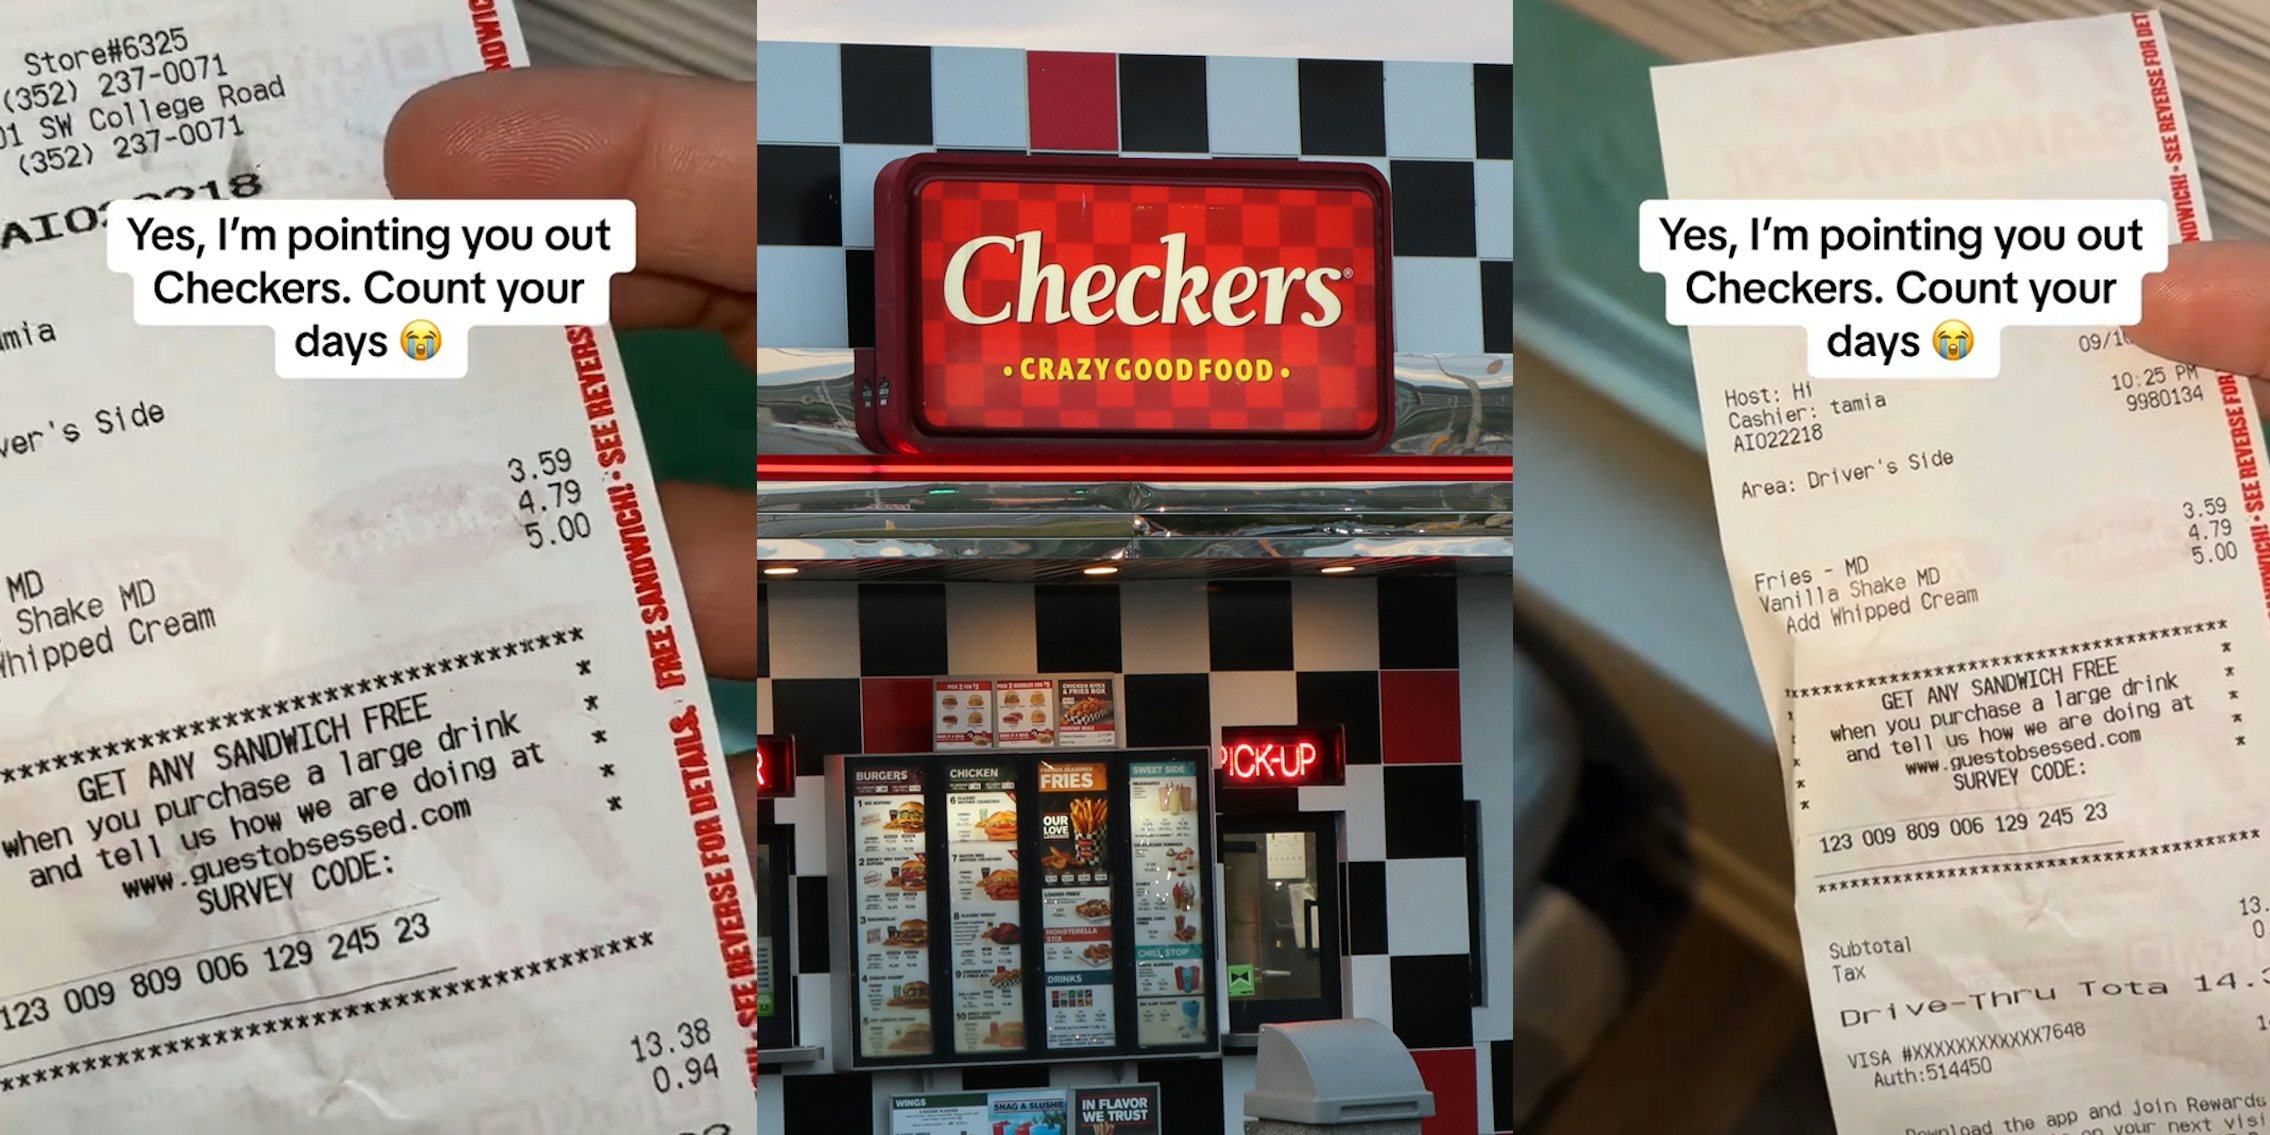 cker's customer holding receipt